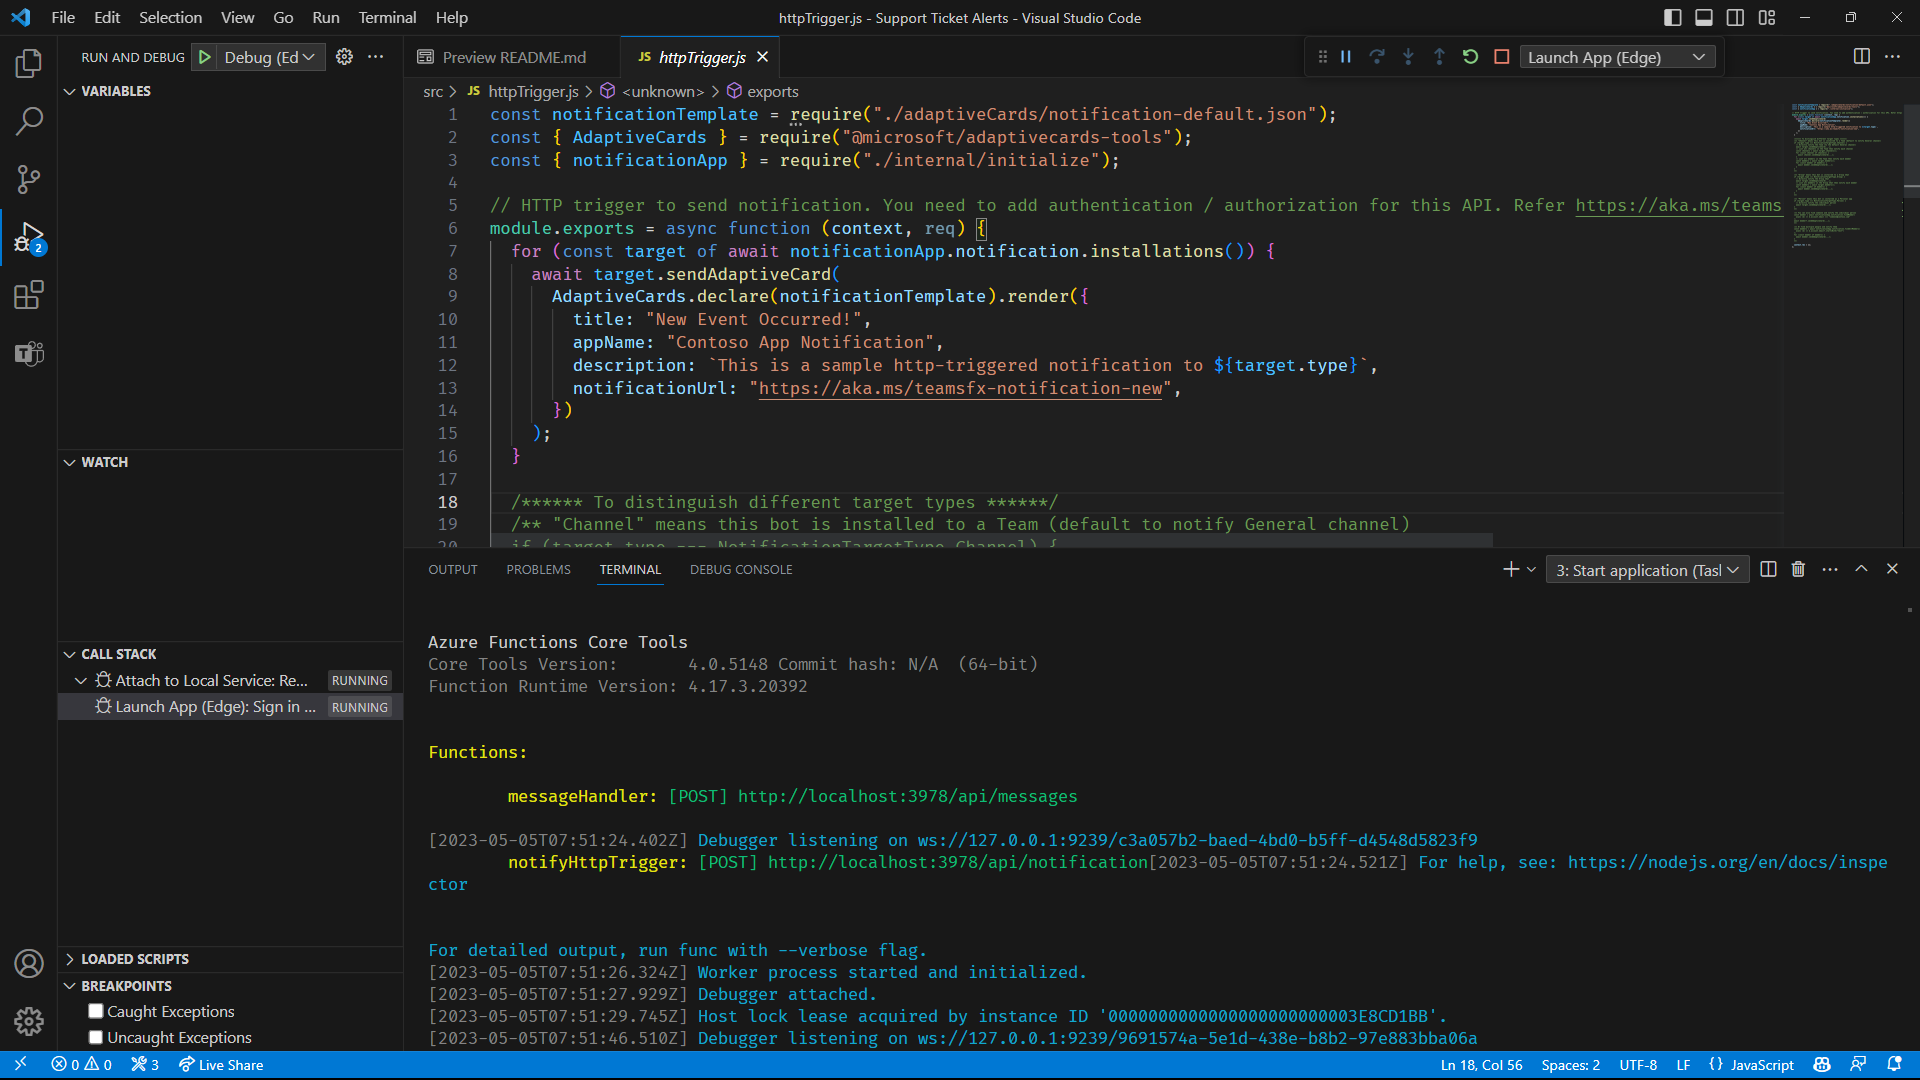 Screenshot of Visual Studio Code that shows the notification bot code, debug pane, and terminal tasks.